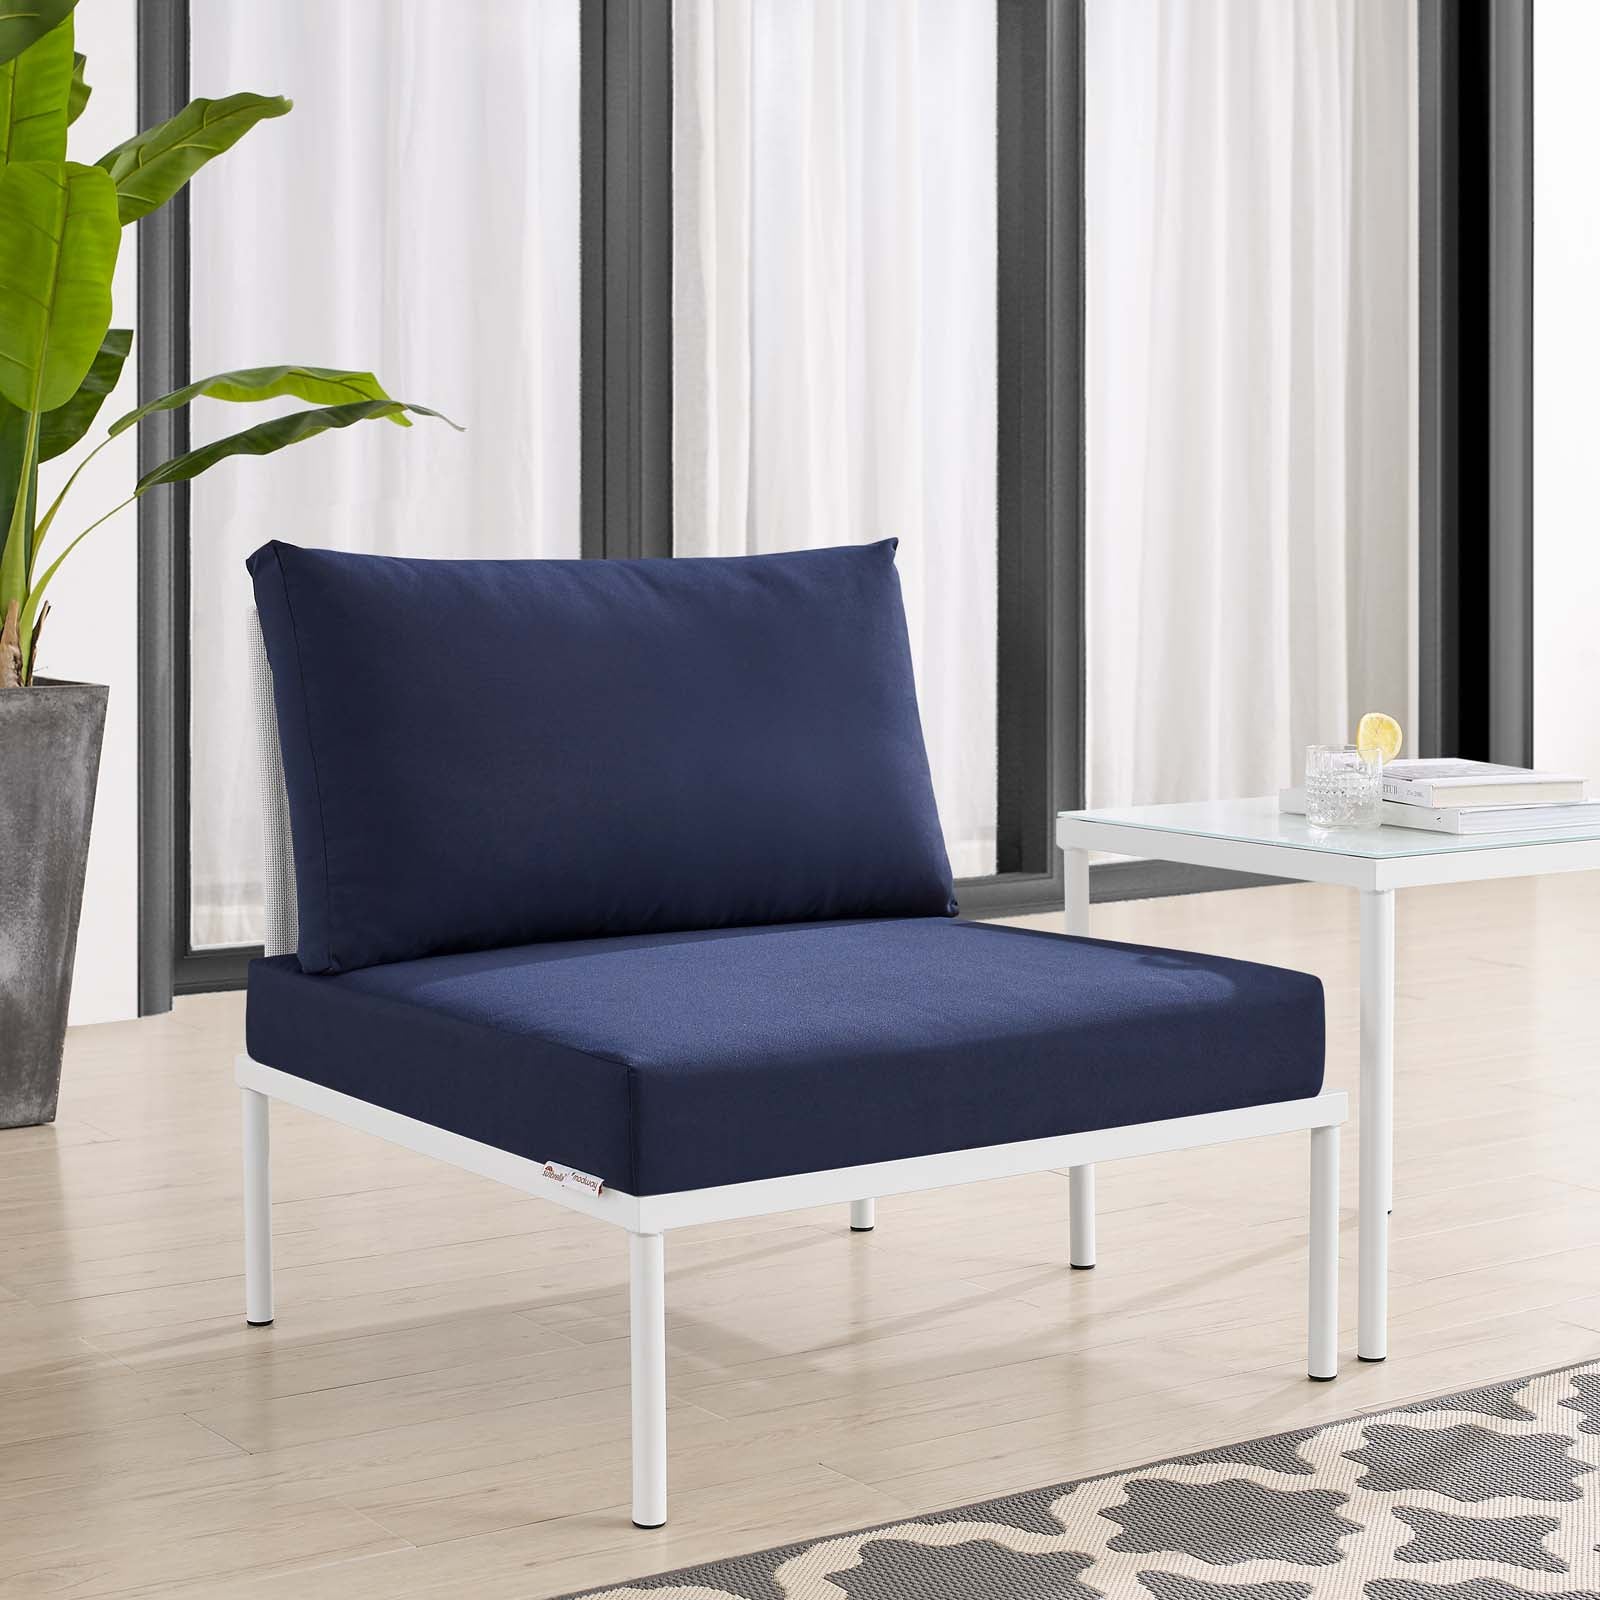 Modway Outdoor Chairs - Harmony Sunbrella Outdoor Patio Aluminum Armless Chair White Navy